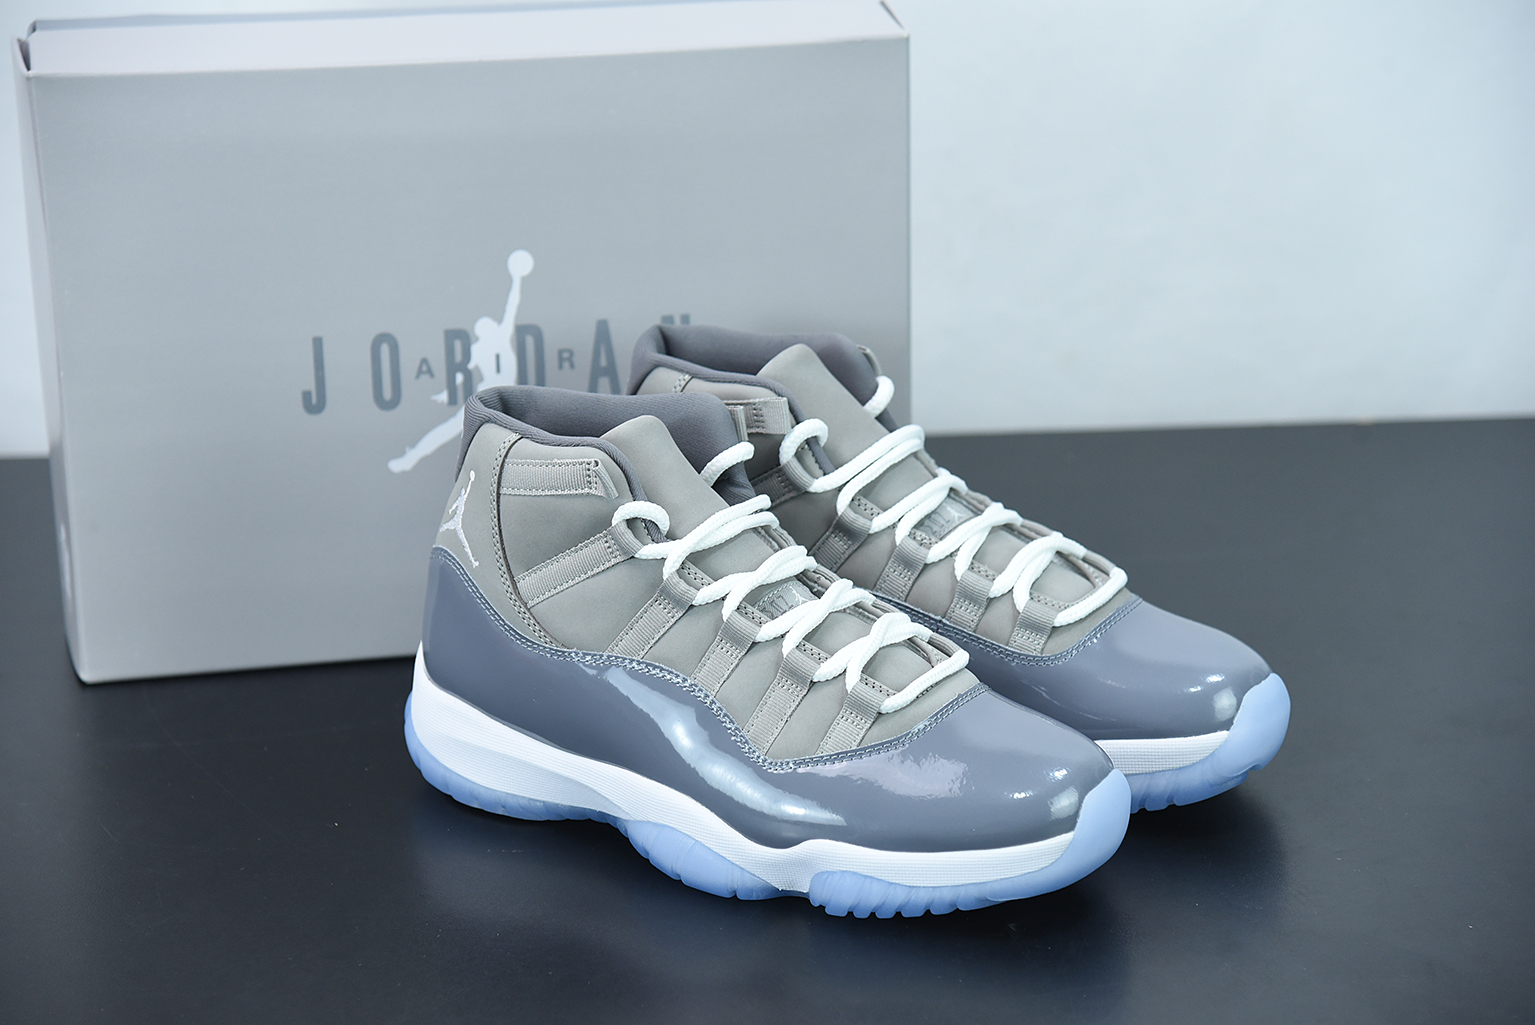 grey and white jordan 11